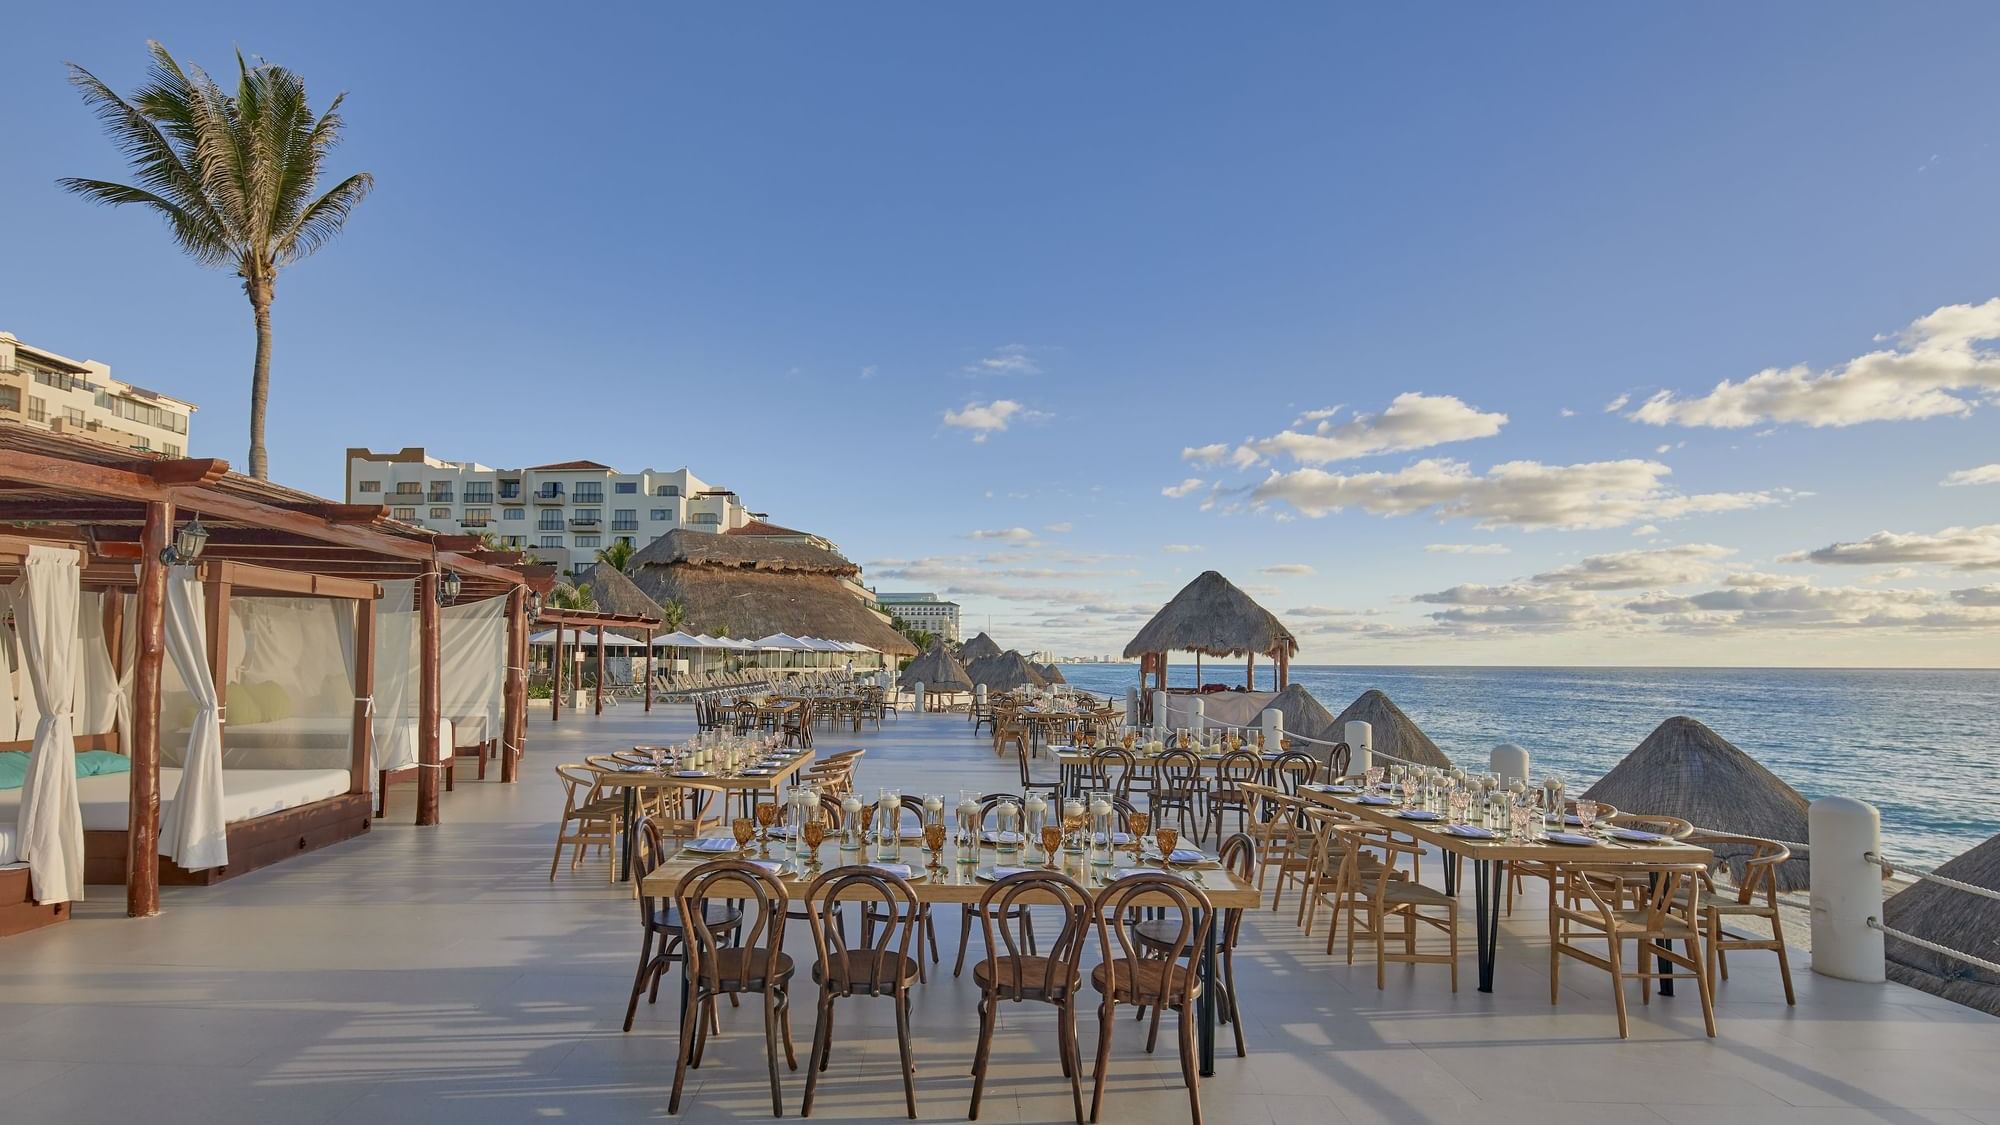 Chairs arranged by the beach, Fiesta Americana Hotels